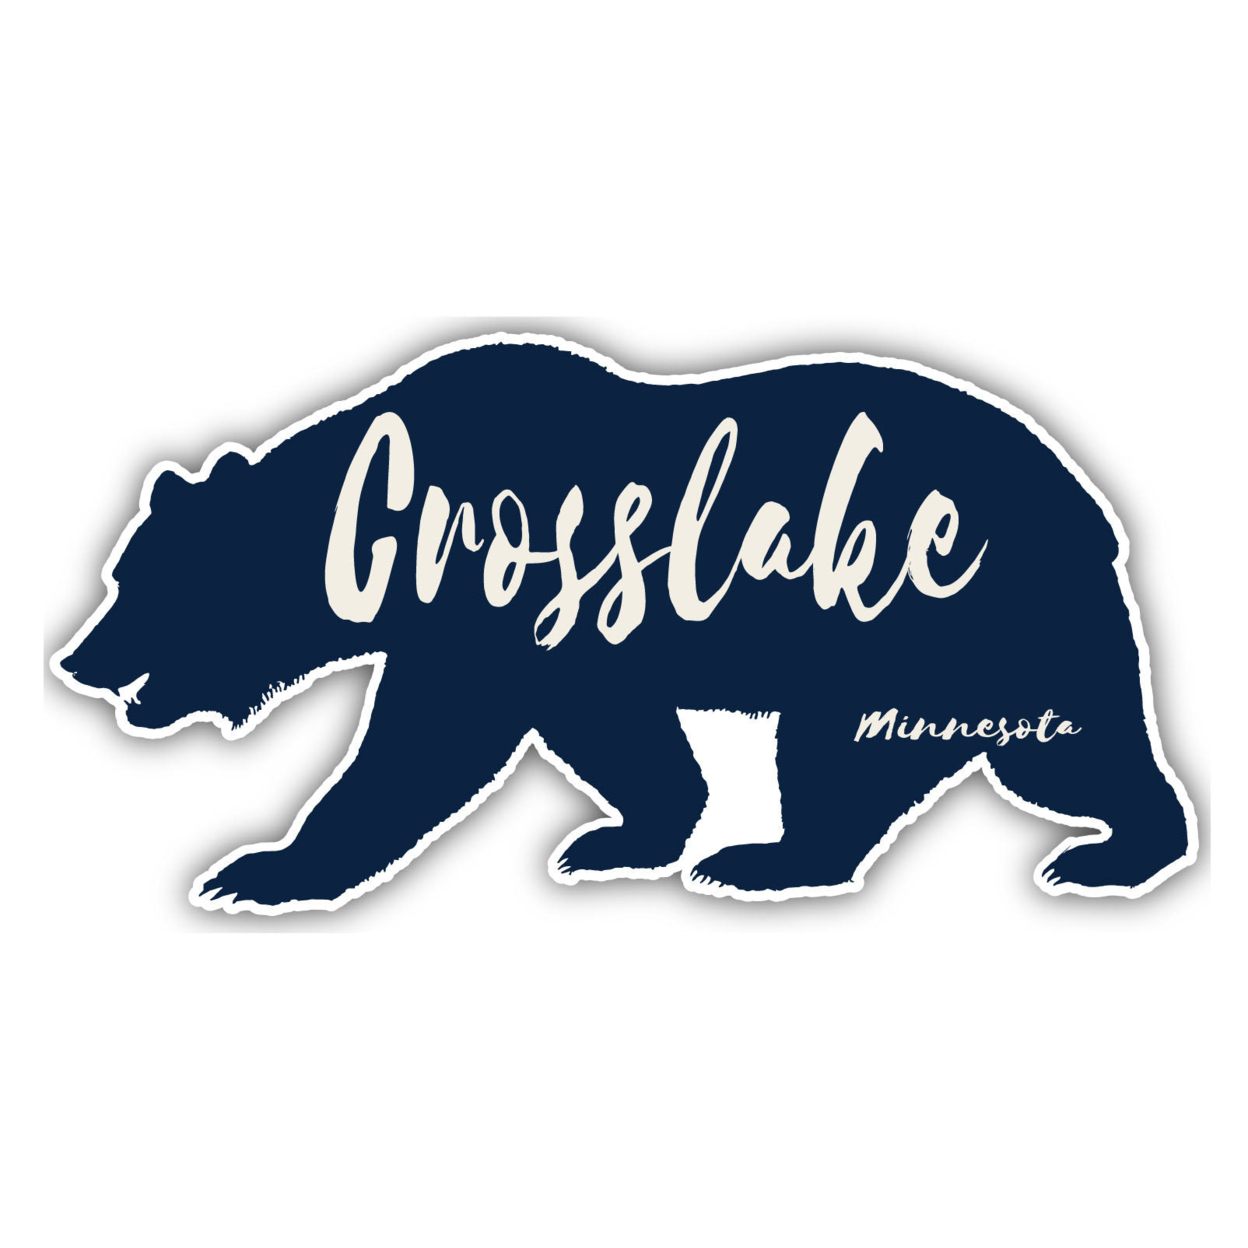 Crosslake Minnesota Souvenir Decorative Stickers (Choose Theme And Size) - 4-Pack, 10-Inch, Bear